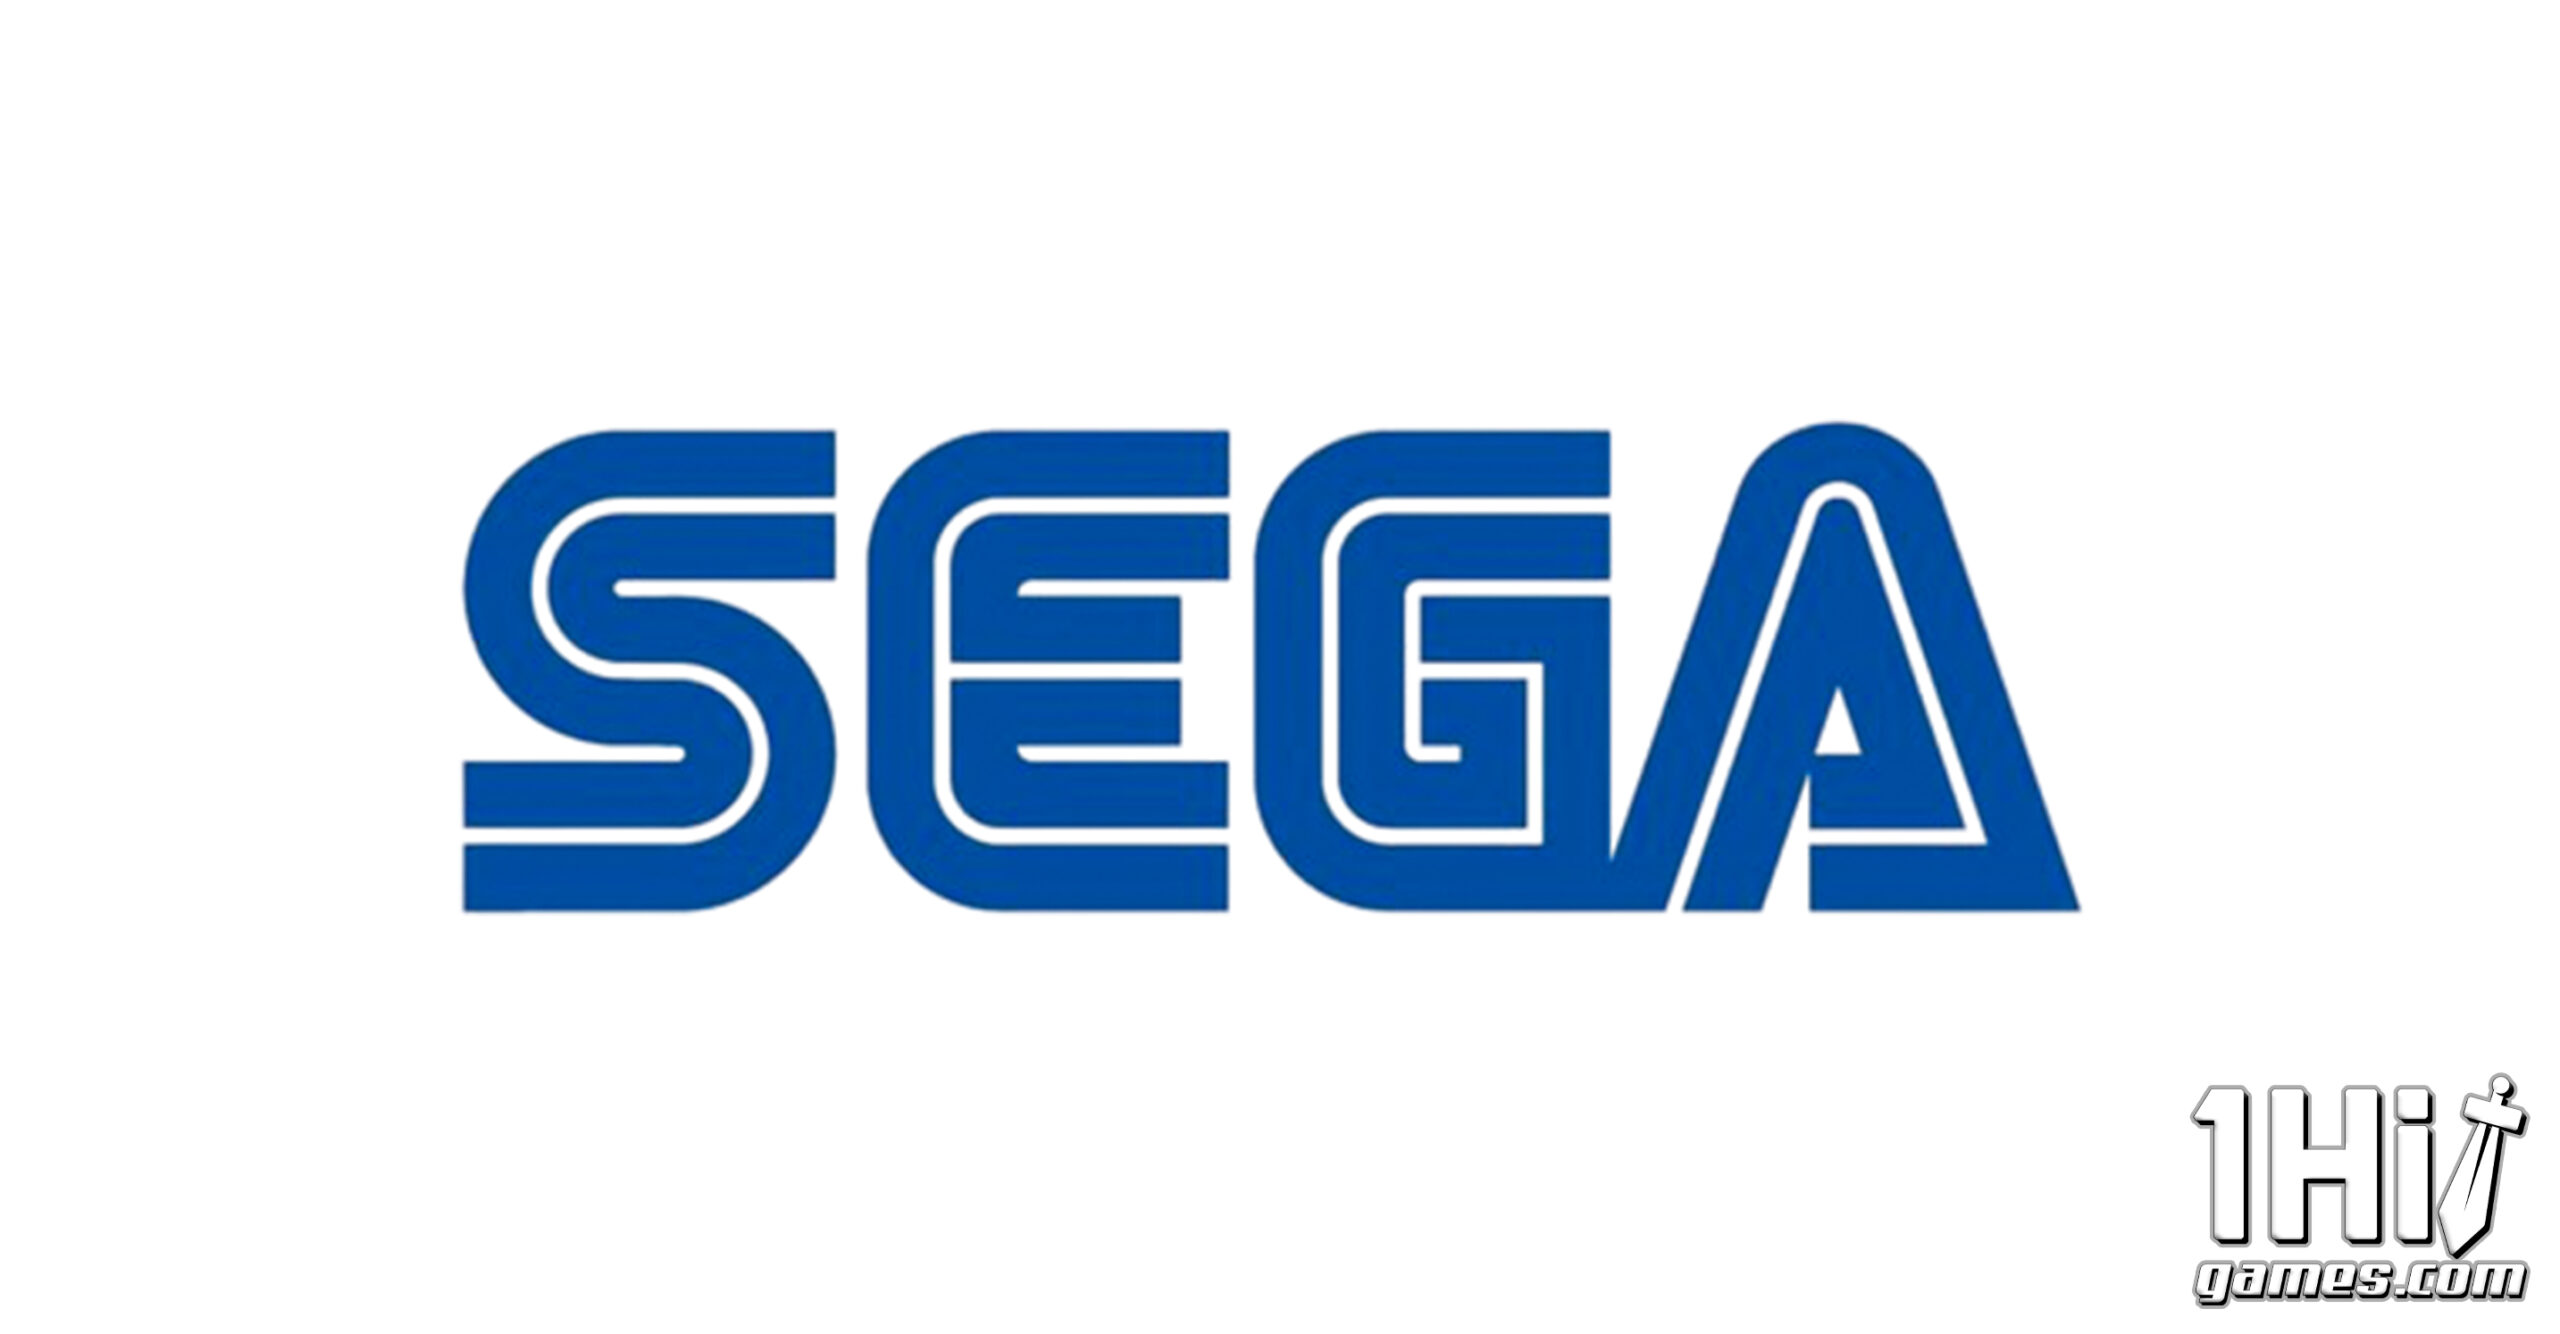 SEGA produtora meda drive master system dream cast 1hit games